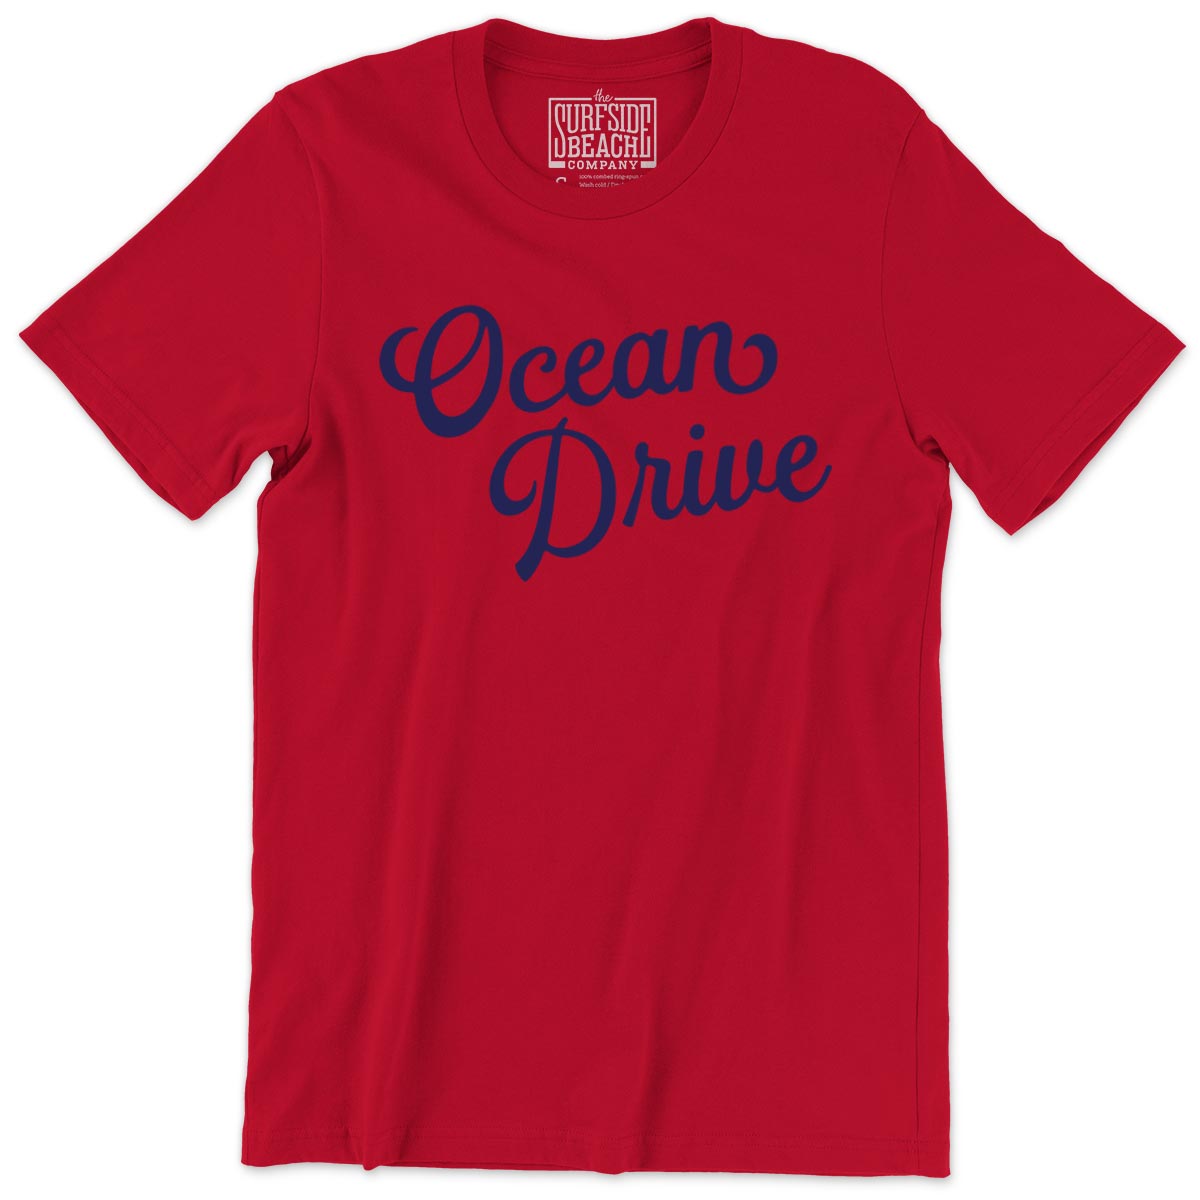 Ocean Drive (Vintage Seaboard) unisex T-Shirt Red / M